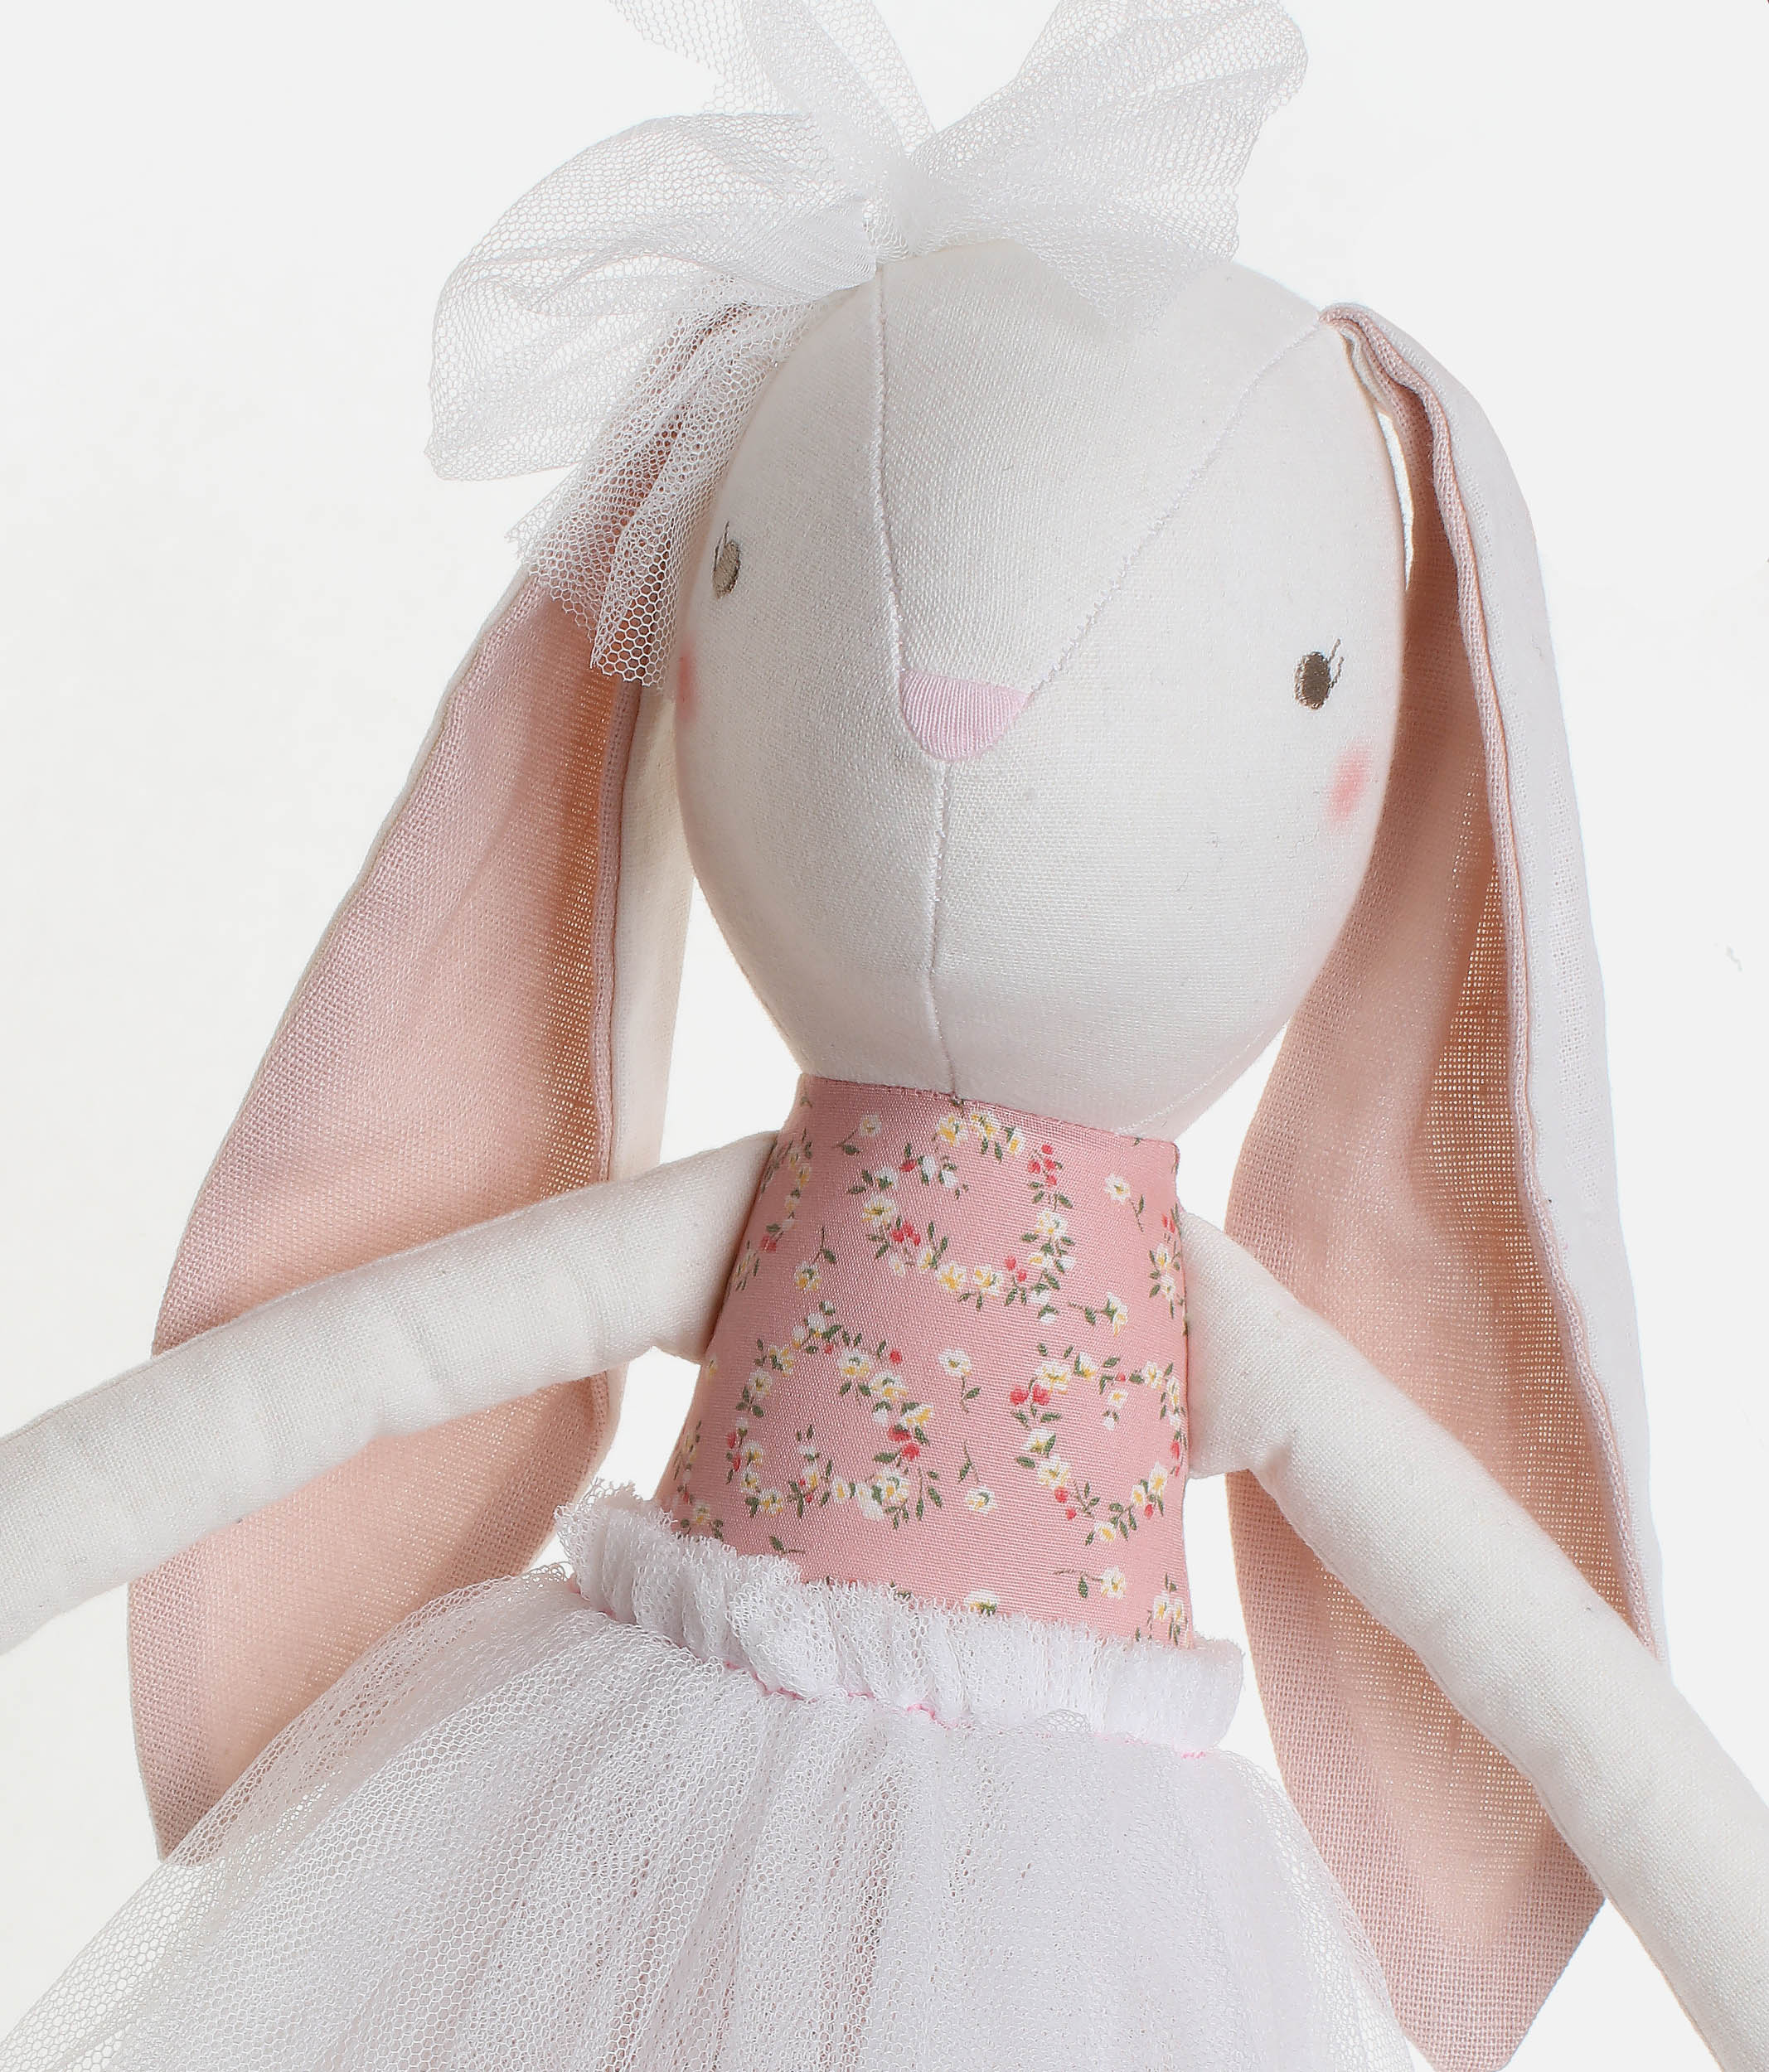 Bronte Ballerina Bunny Doll - N11489PH